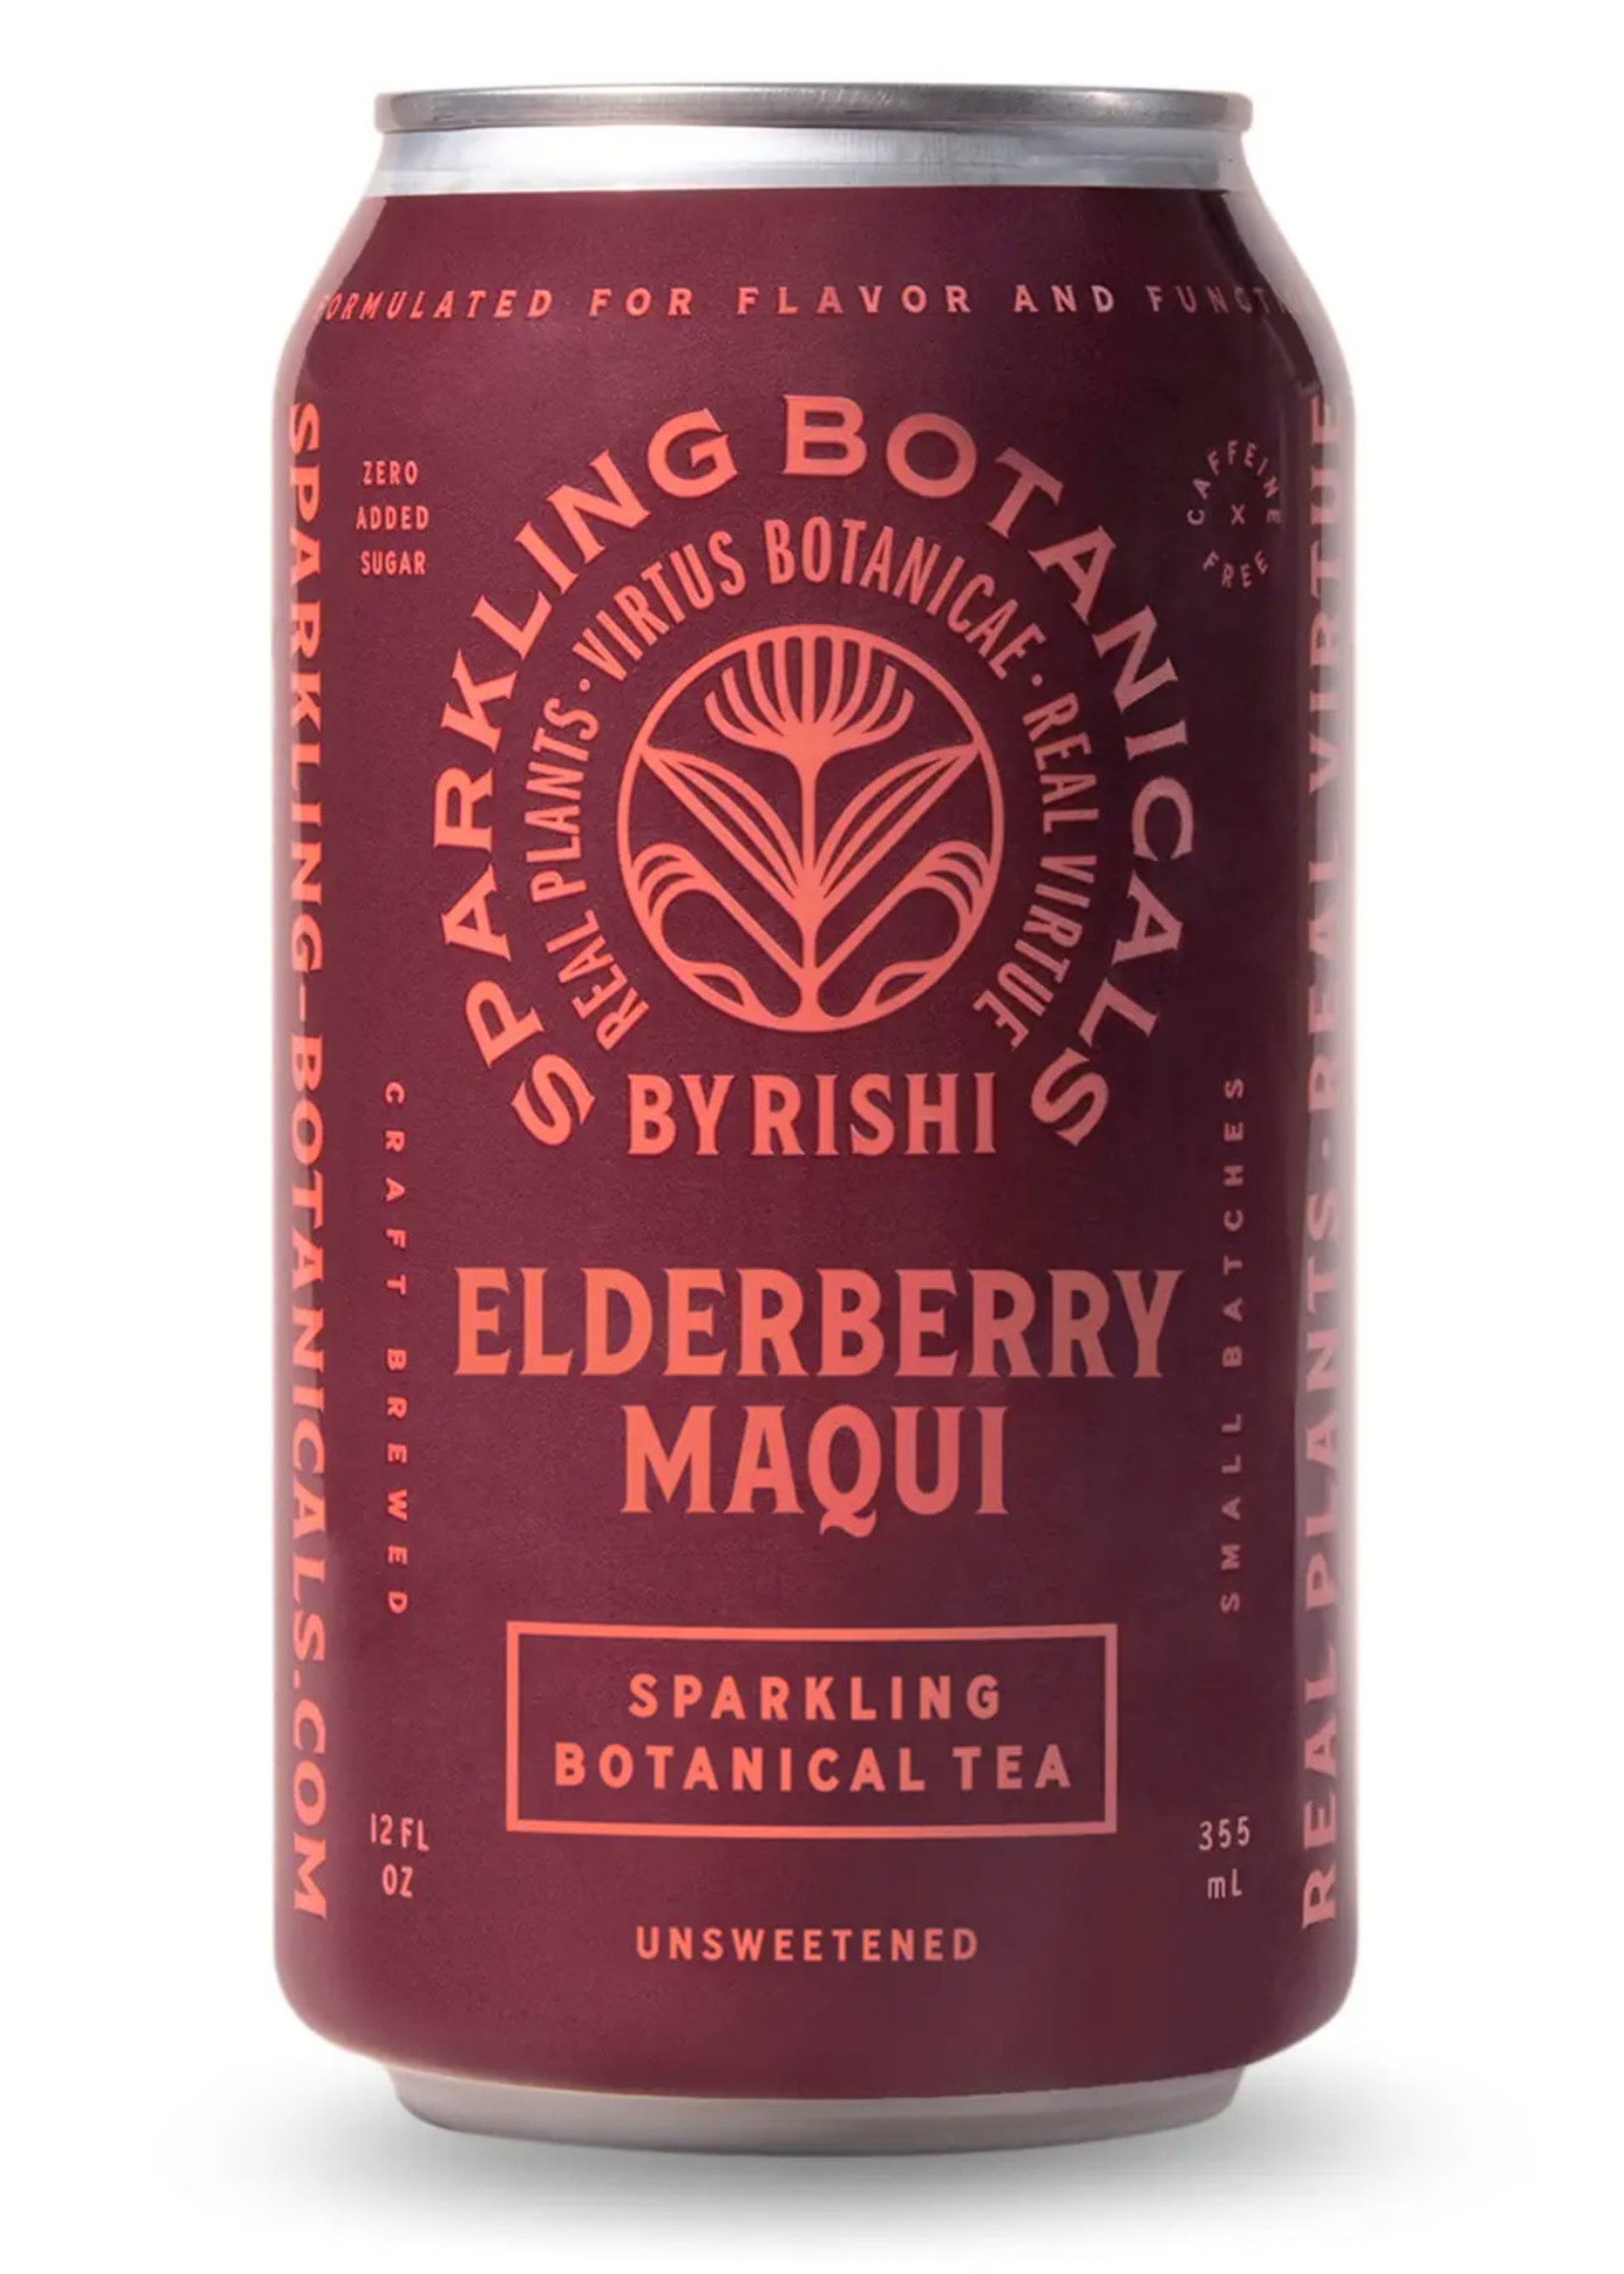 Rishi Rishi, Elderberry Maqui Sparkling Botanical Tea, 12oz can